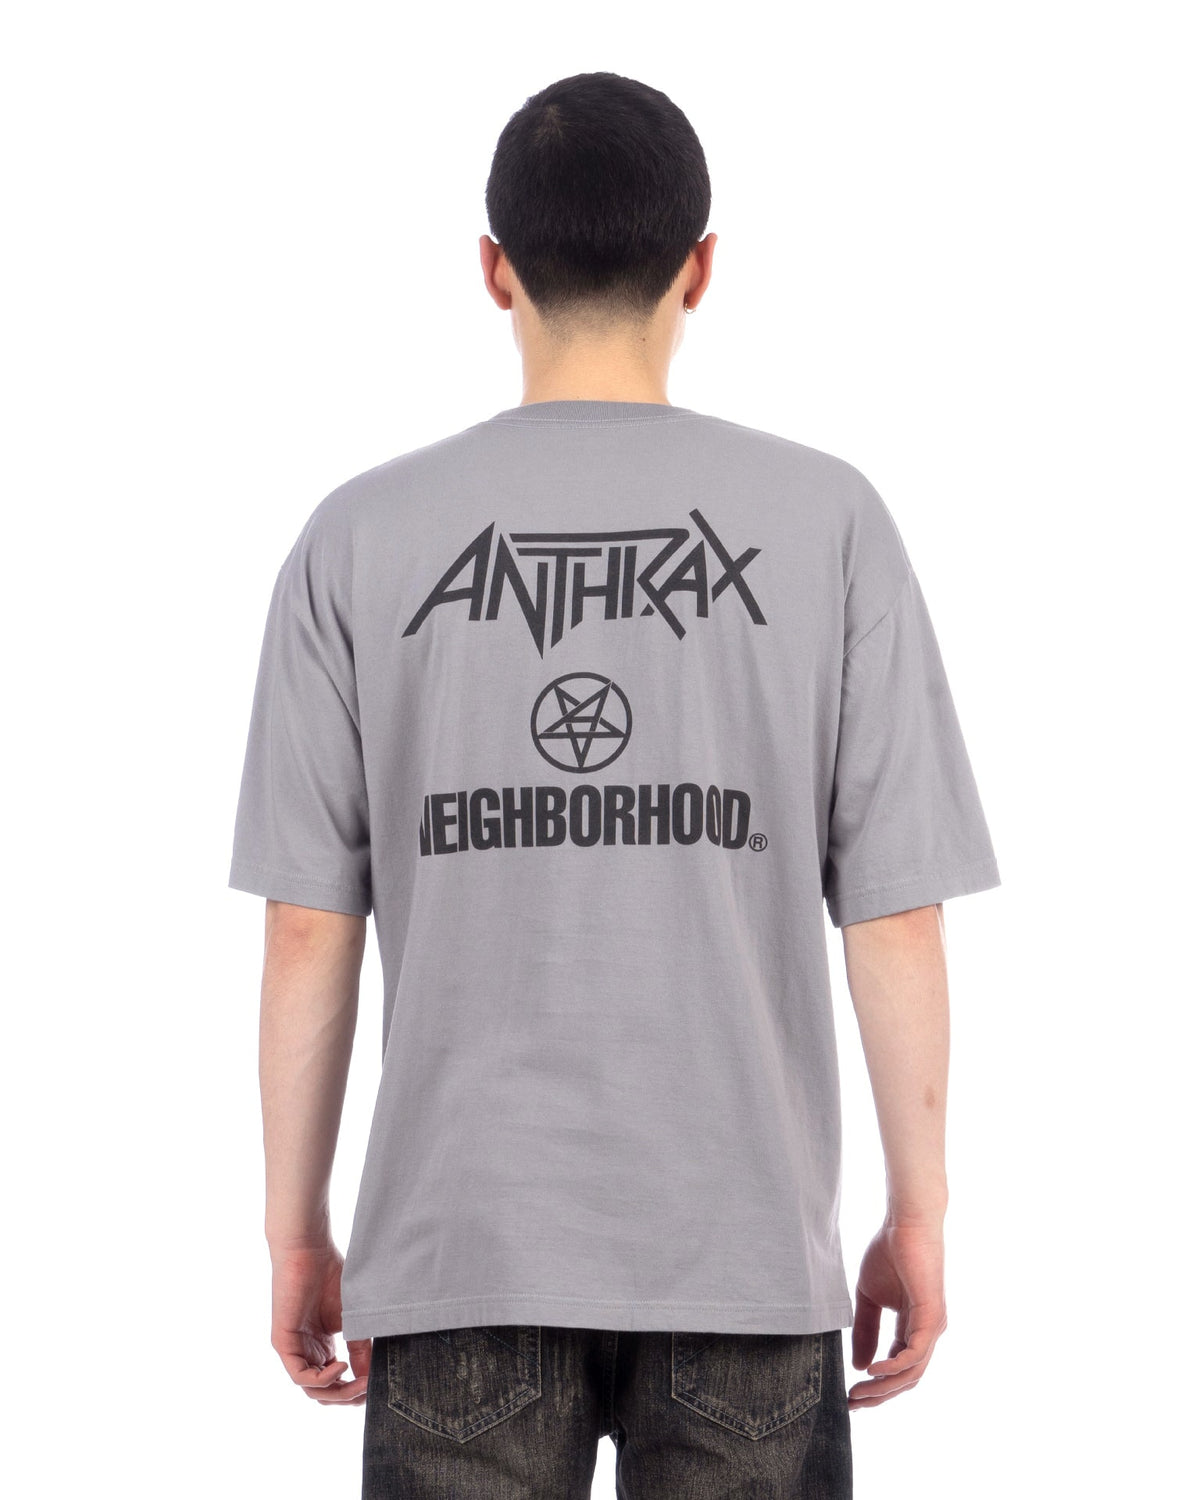 NEIGHBORHOOD | x ANTHRAX T-Shirt-2 Gray - Concrete